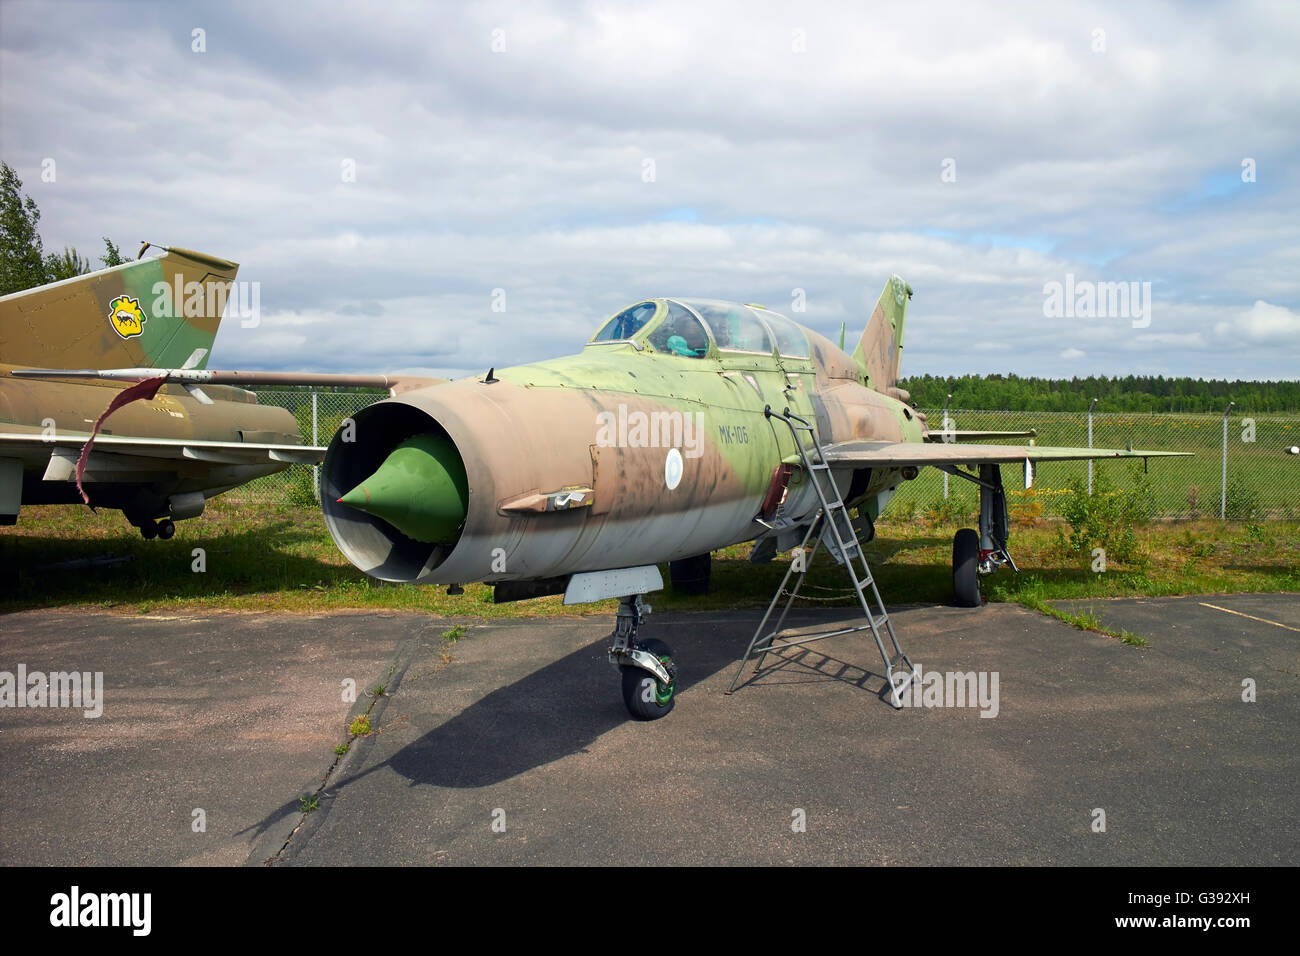 MiG-21UM jet fighter on display, Finland Stock Photo